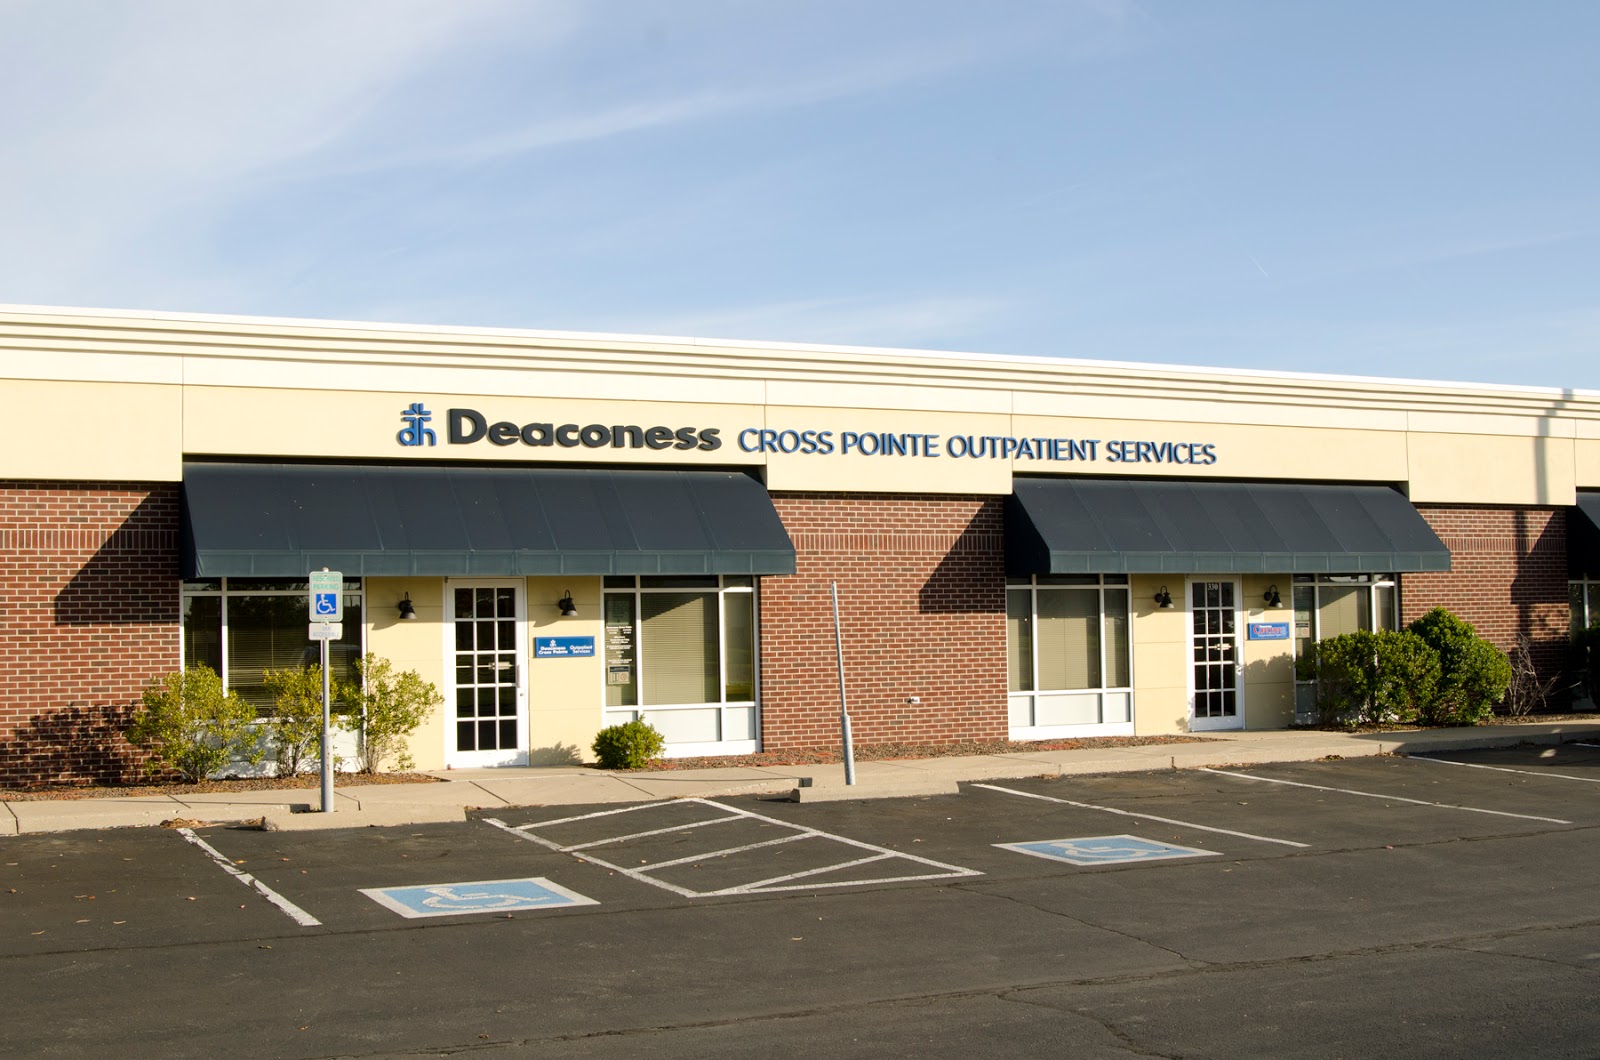 Deaconess Cross Pointe Outpatient Services